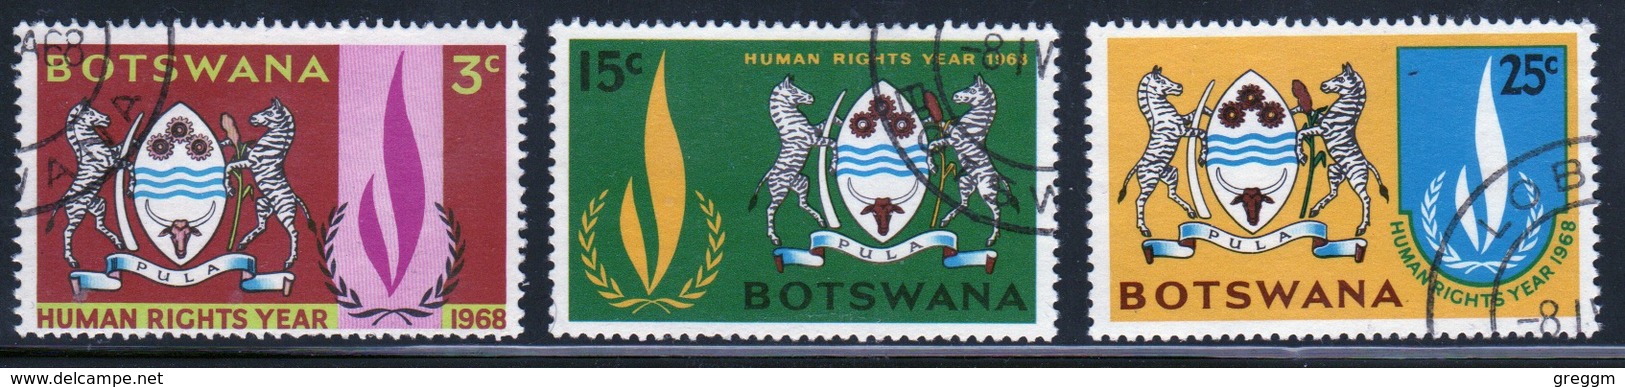 Botswana 1968 Set Of Stamps To Celebrate Human Rights Year. - Botswana (1966-...)